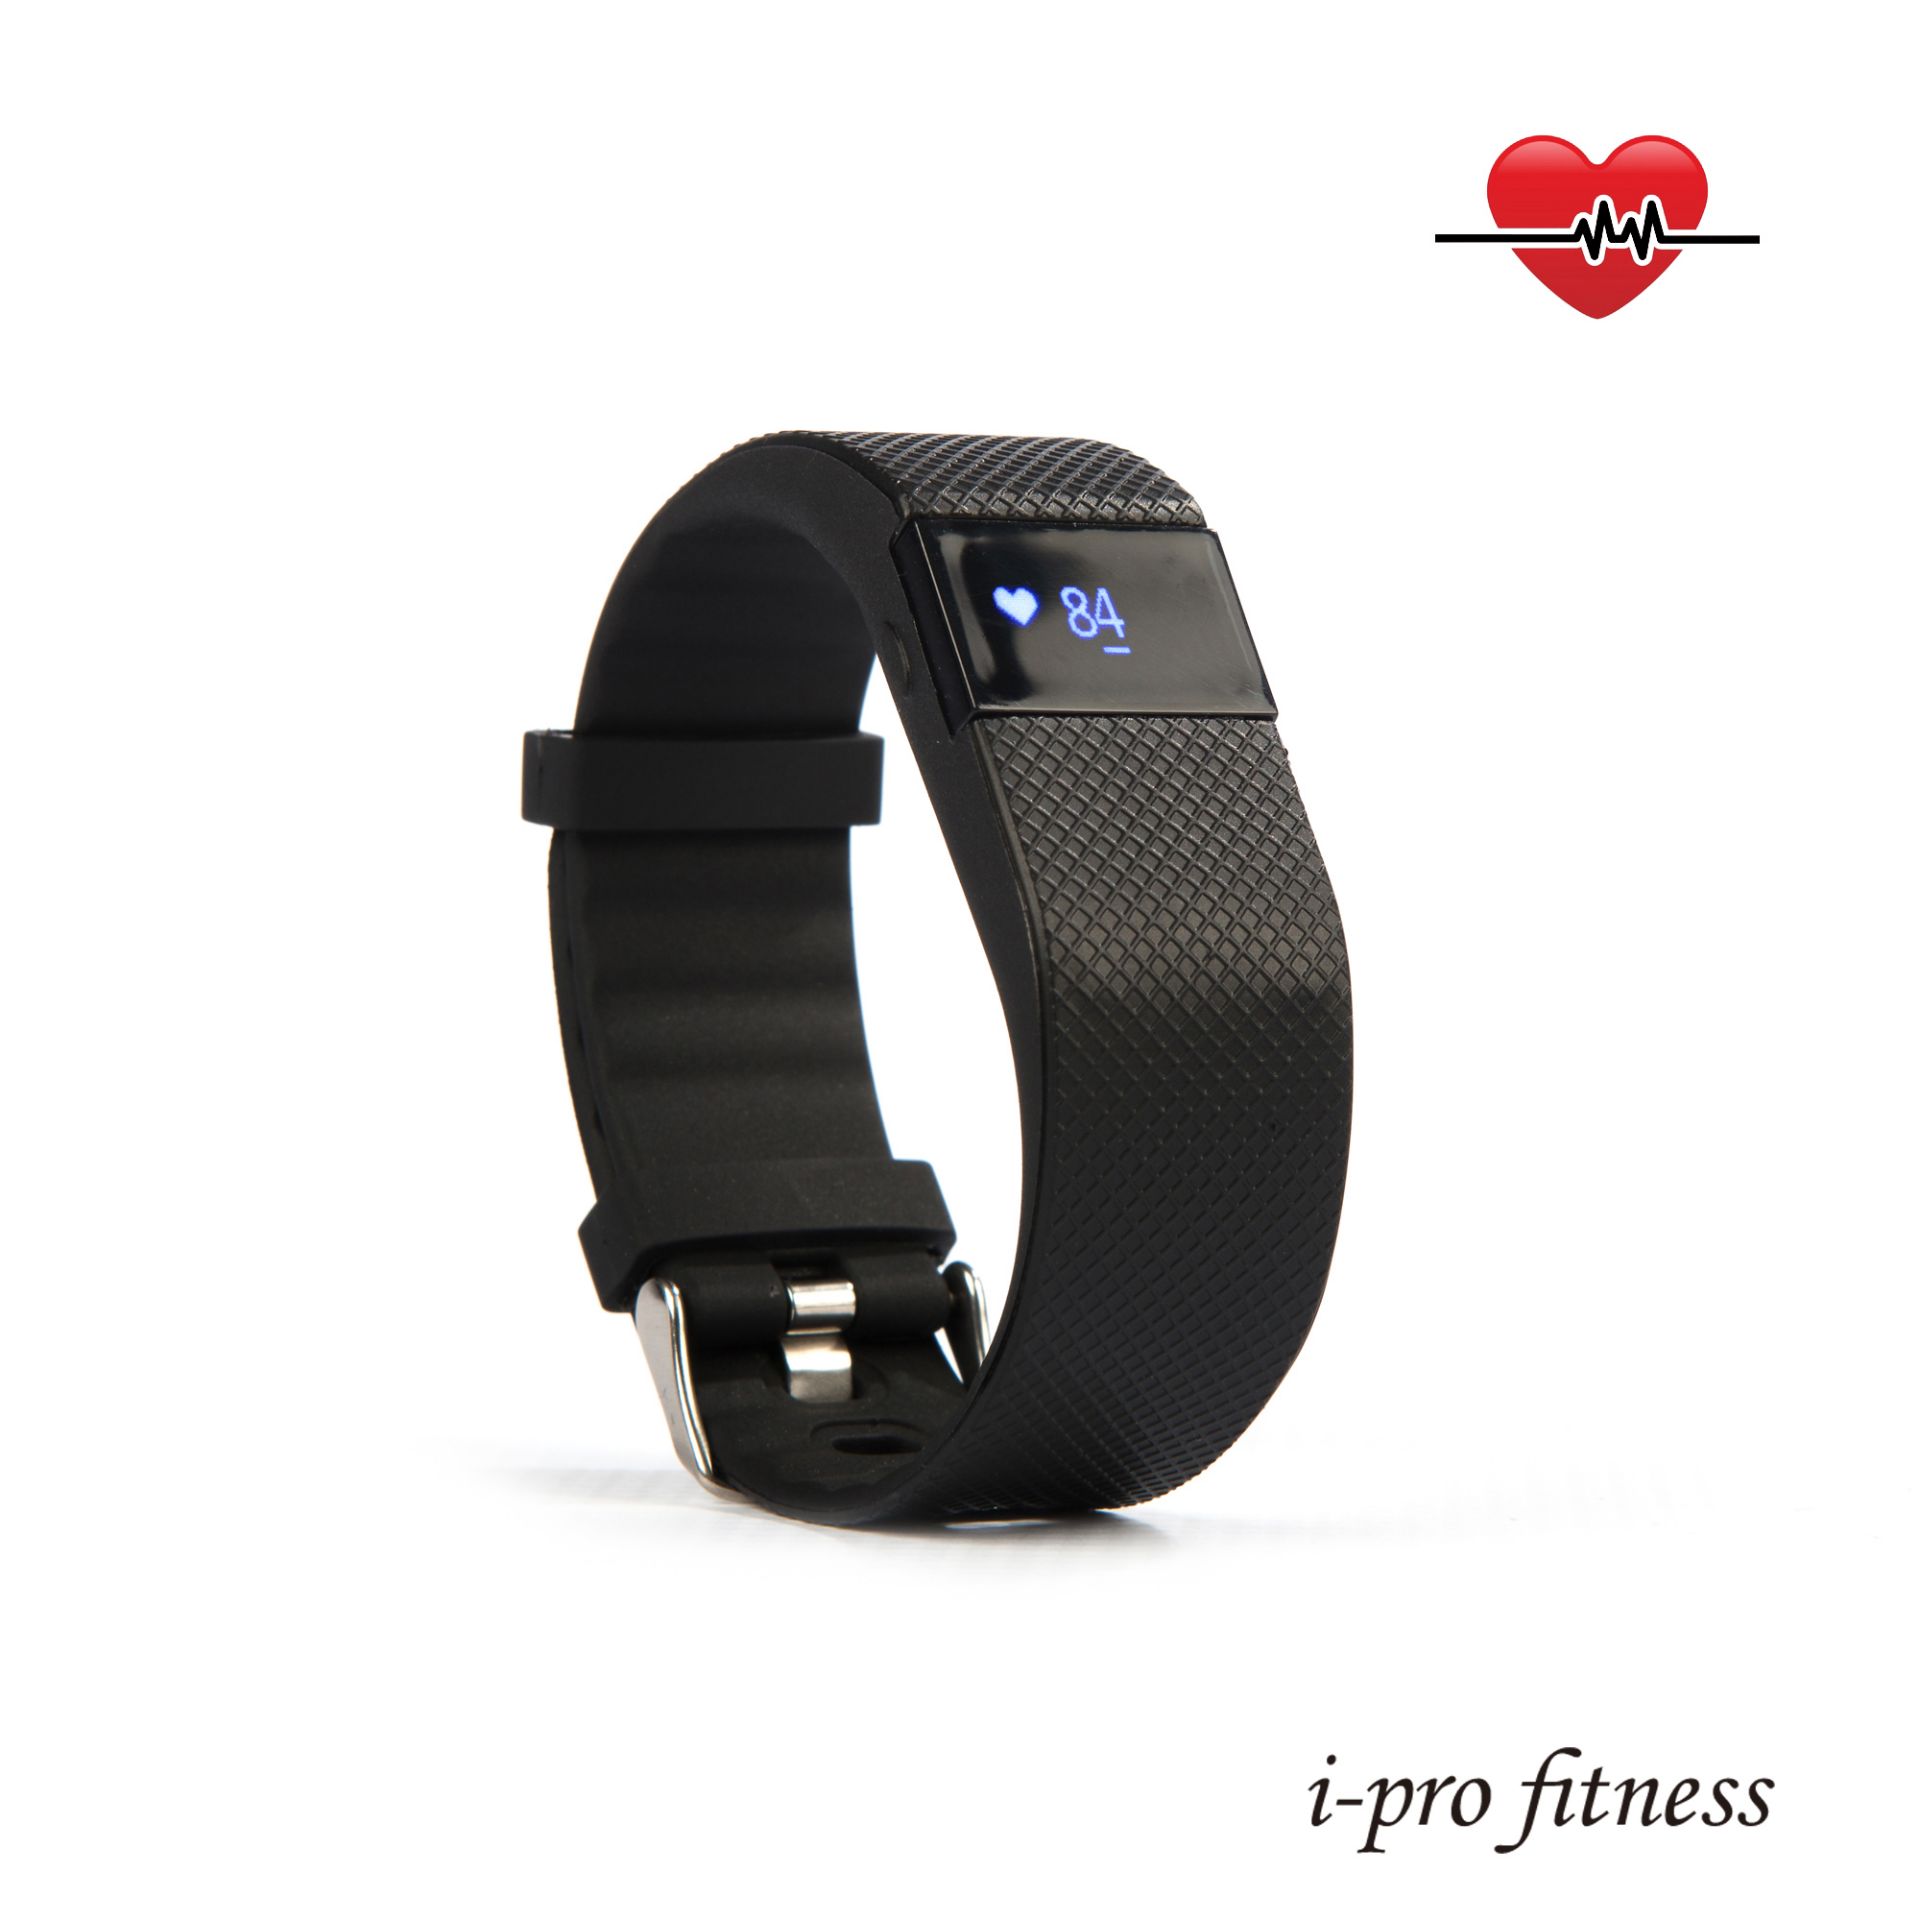 Trade lot 50 x Units Fitness Tracker i-pro fitness, Bluetooth 4.0 Sports Smart Bracelet*** Fitness - Image 4 of 8